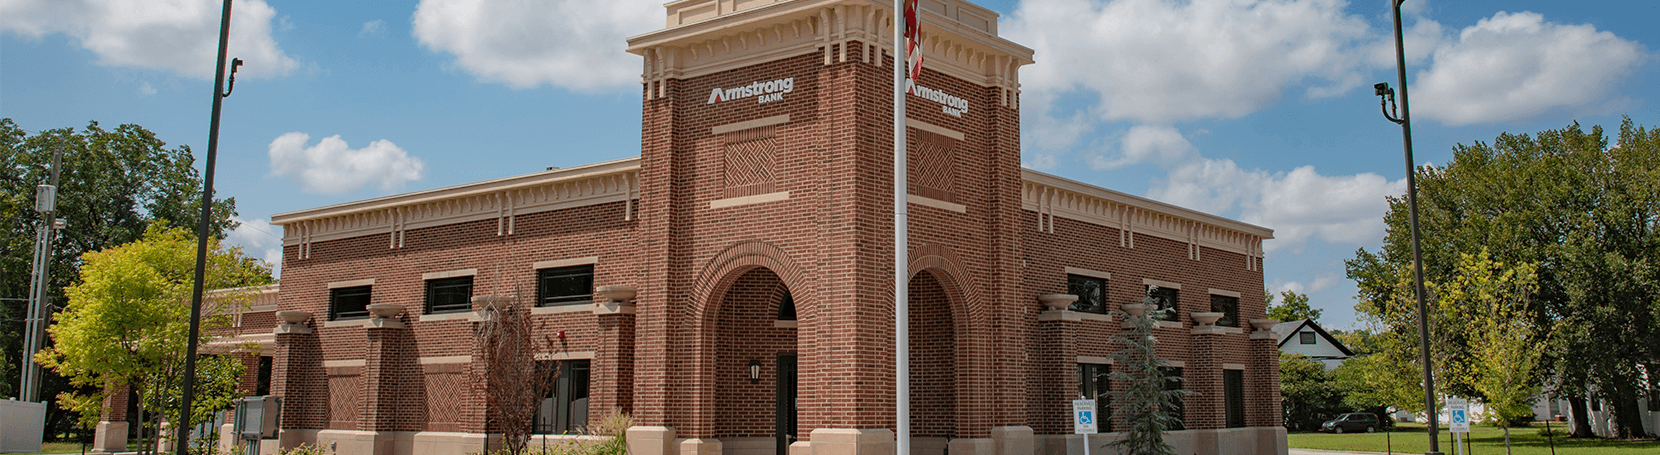 Armstrong Bank building in Dewey, Oklahoma